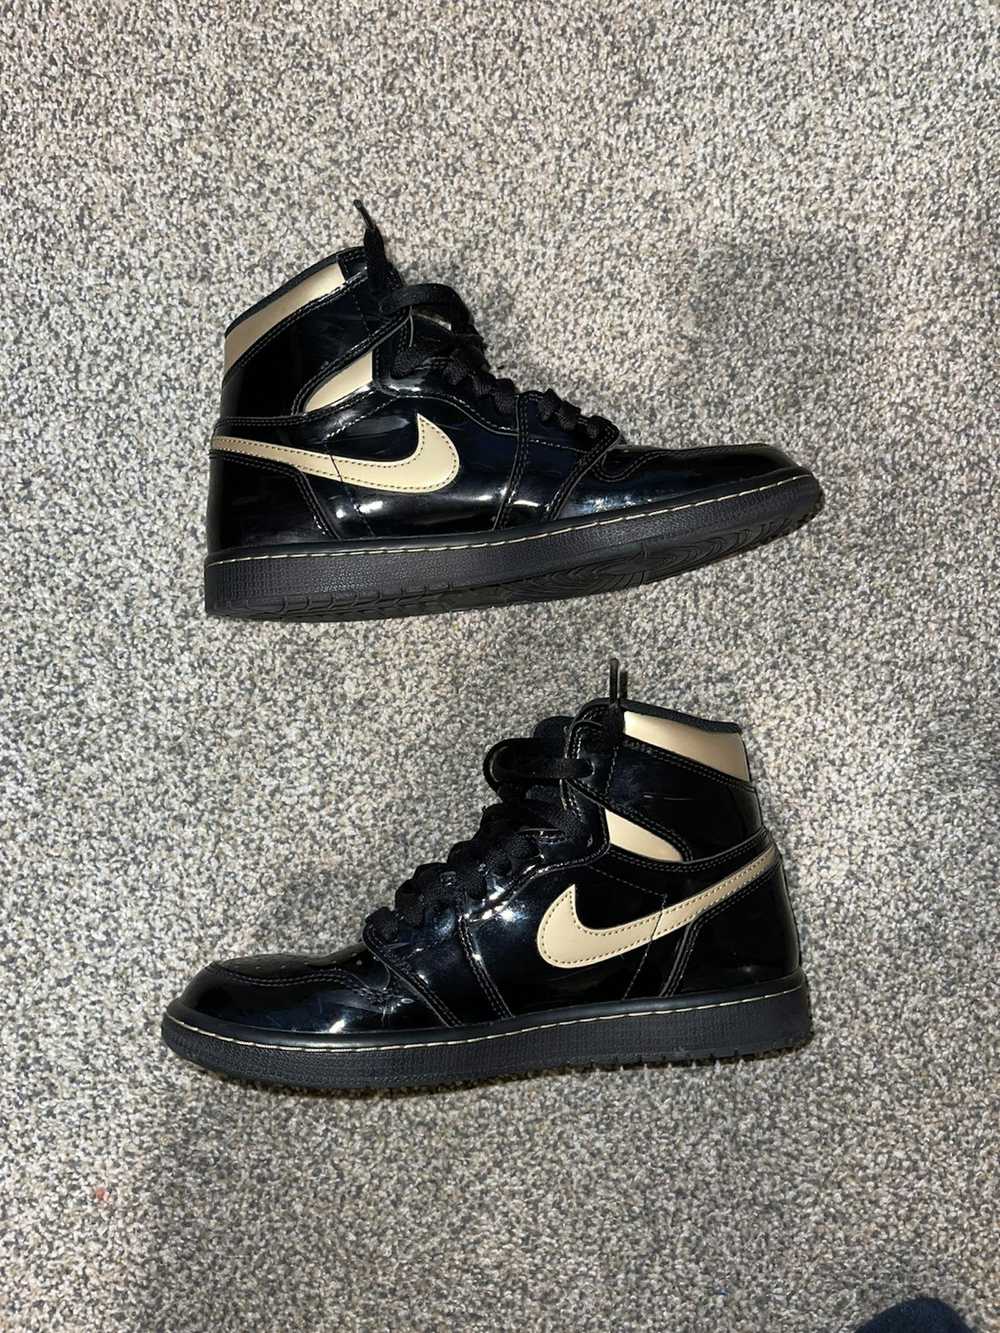 Jordan Brand × Nike Jordan 1 “Black Metallic” - image 3